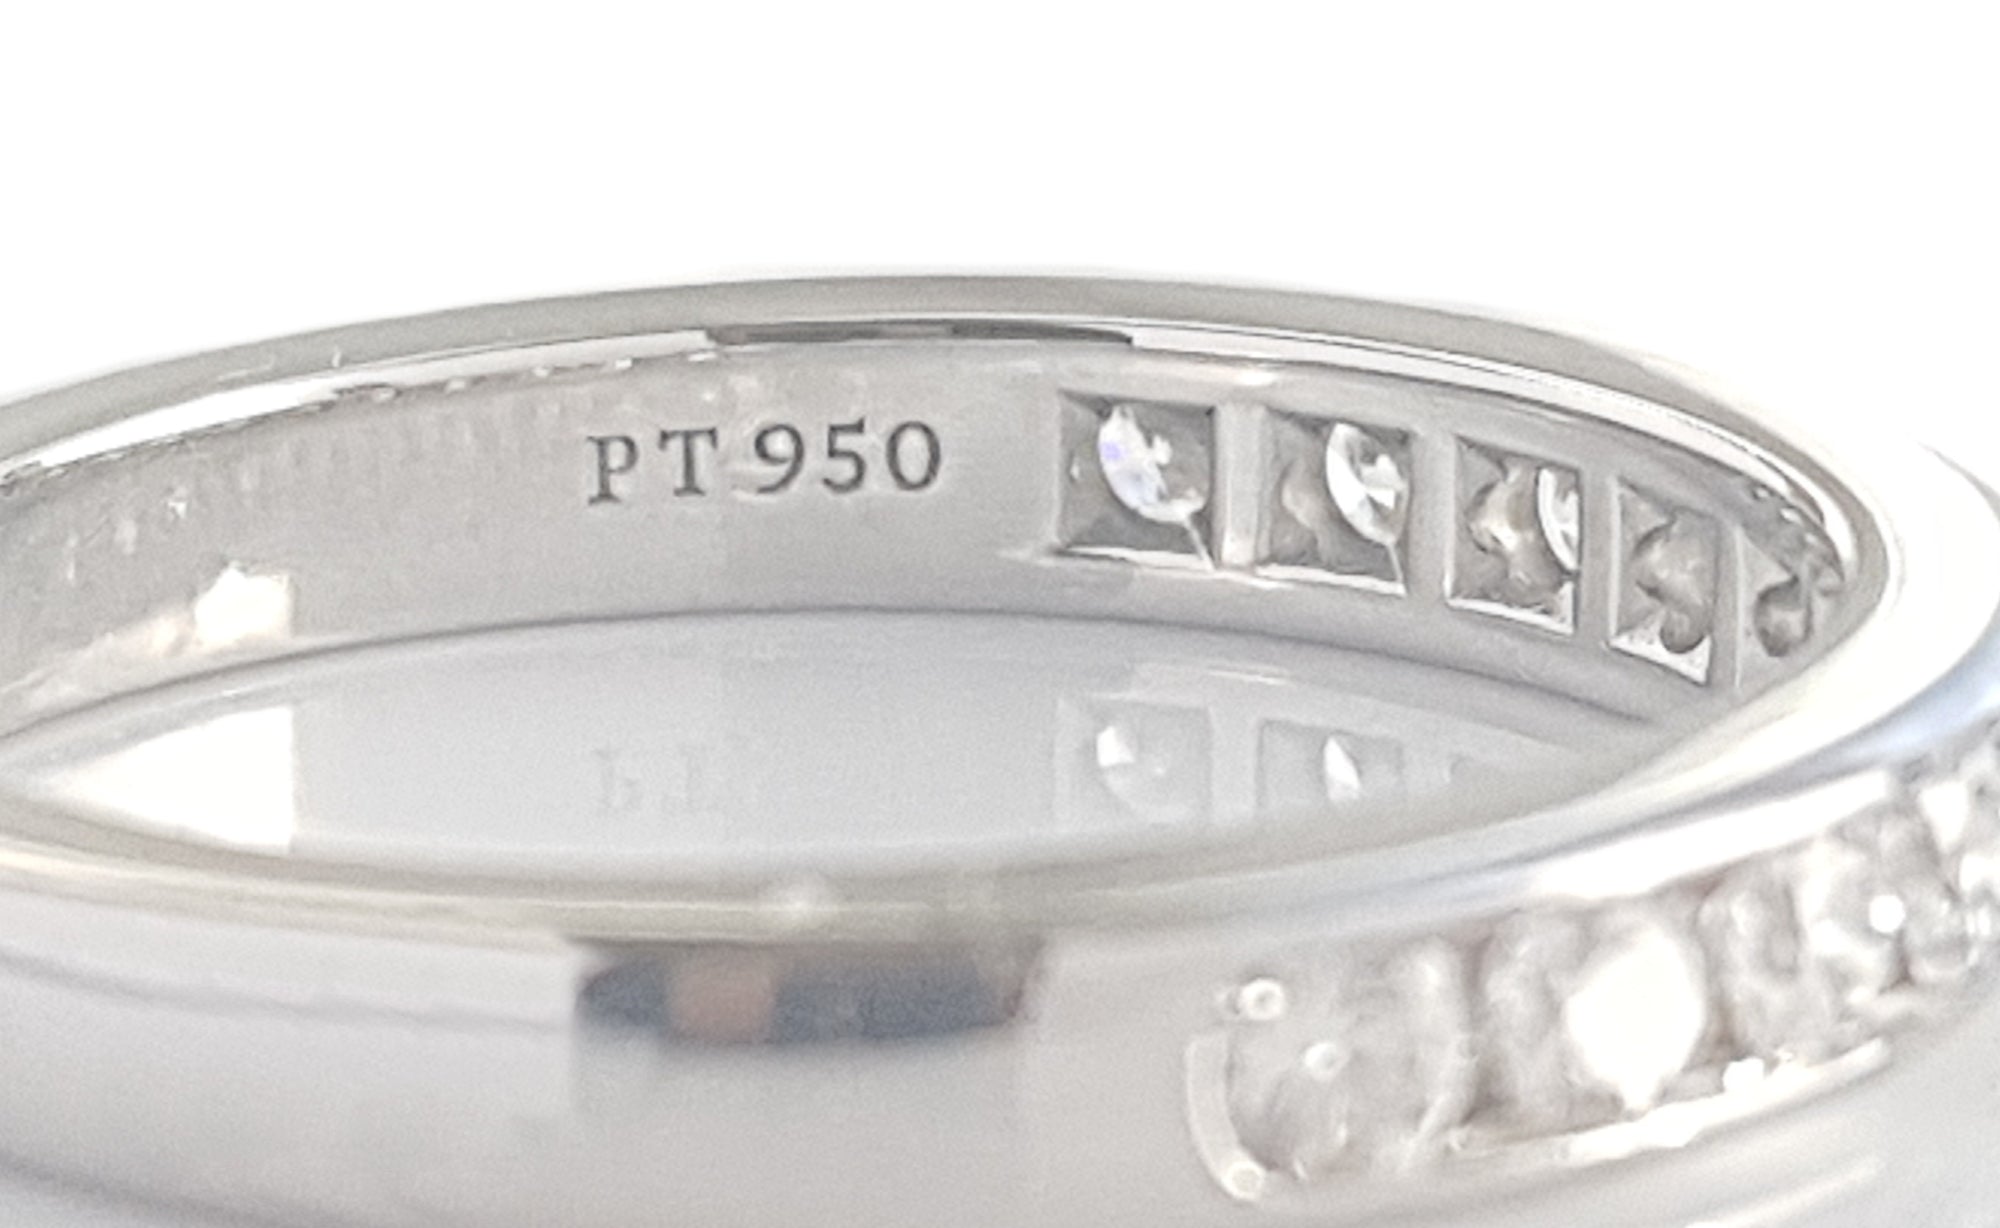 Tiffany & Co. 3mm .33ct Round Brilliant Diamond Channel Set Wedding Band Ring